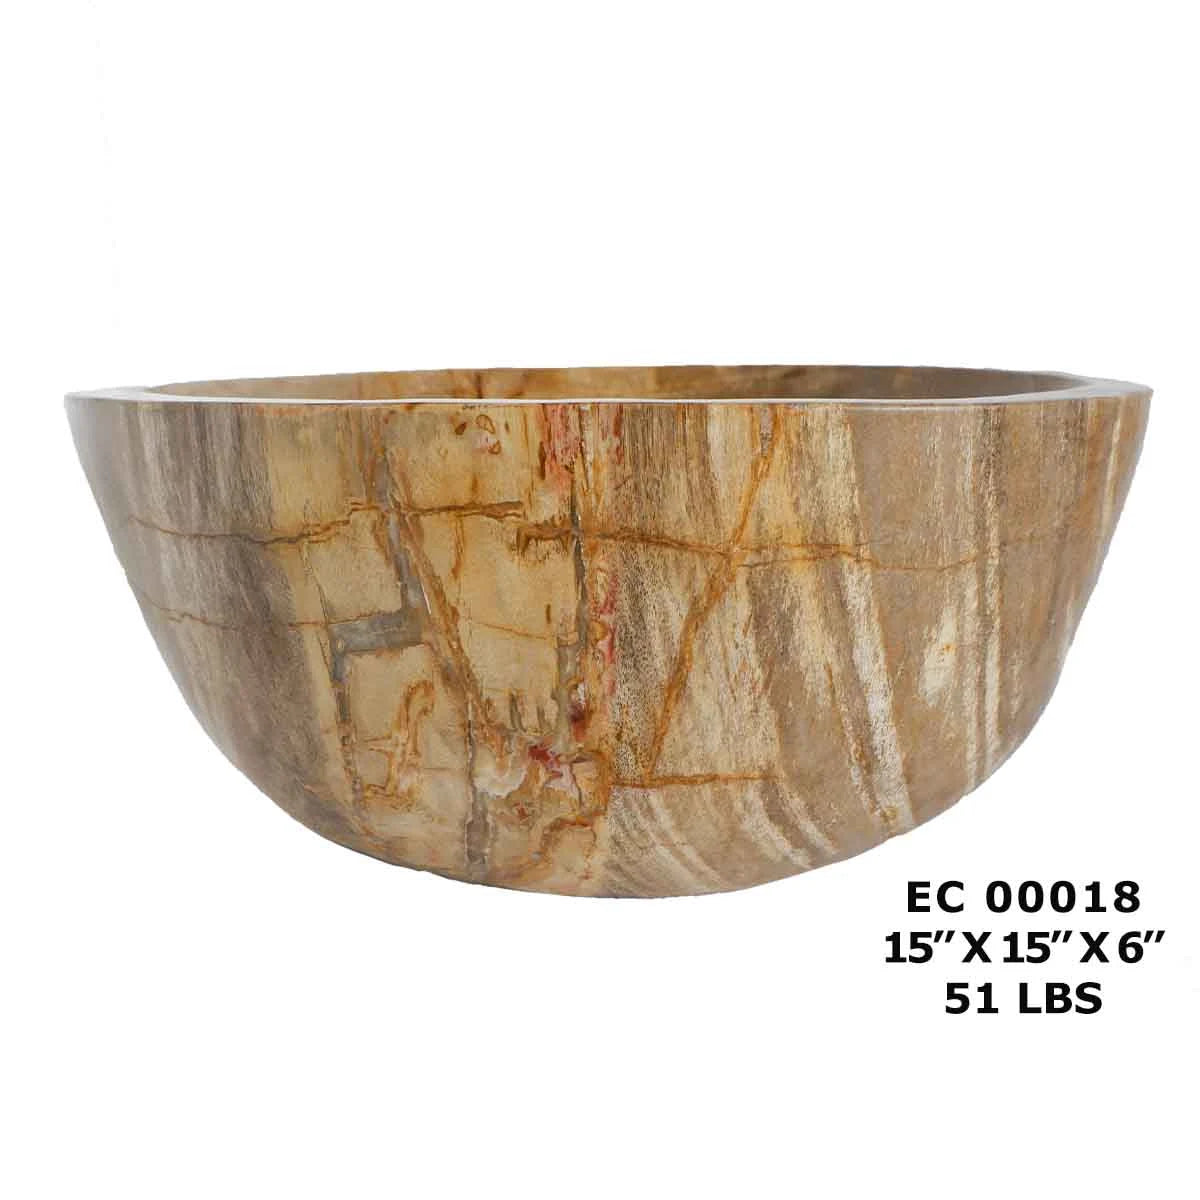 Petrified Wood Single Bowl Sink, Natural Stone Bathroom Sink EC00018